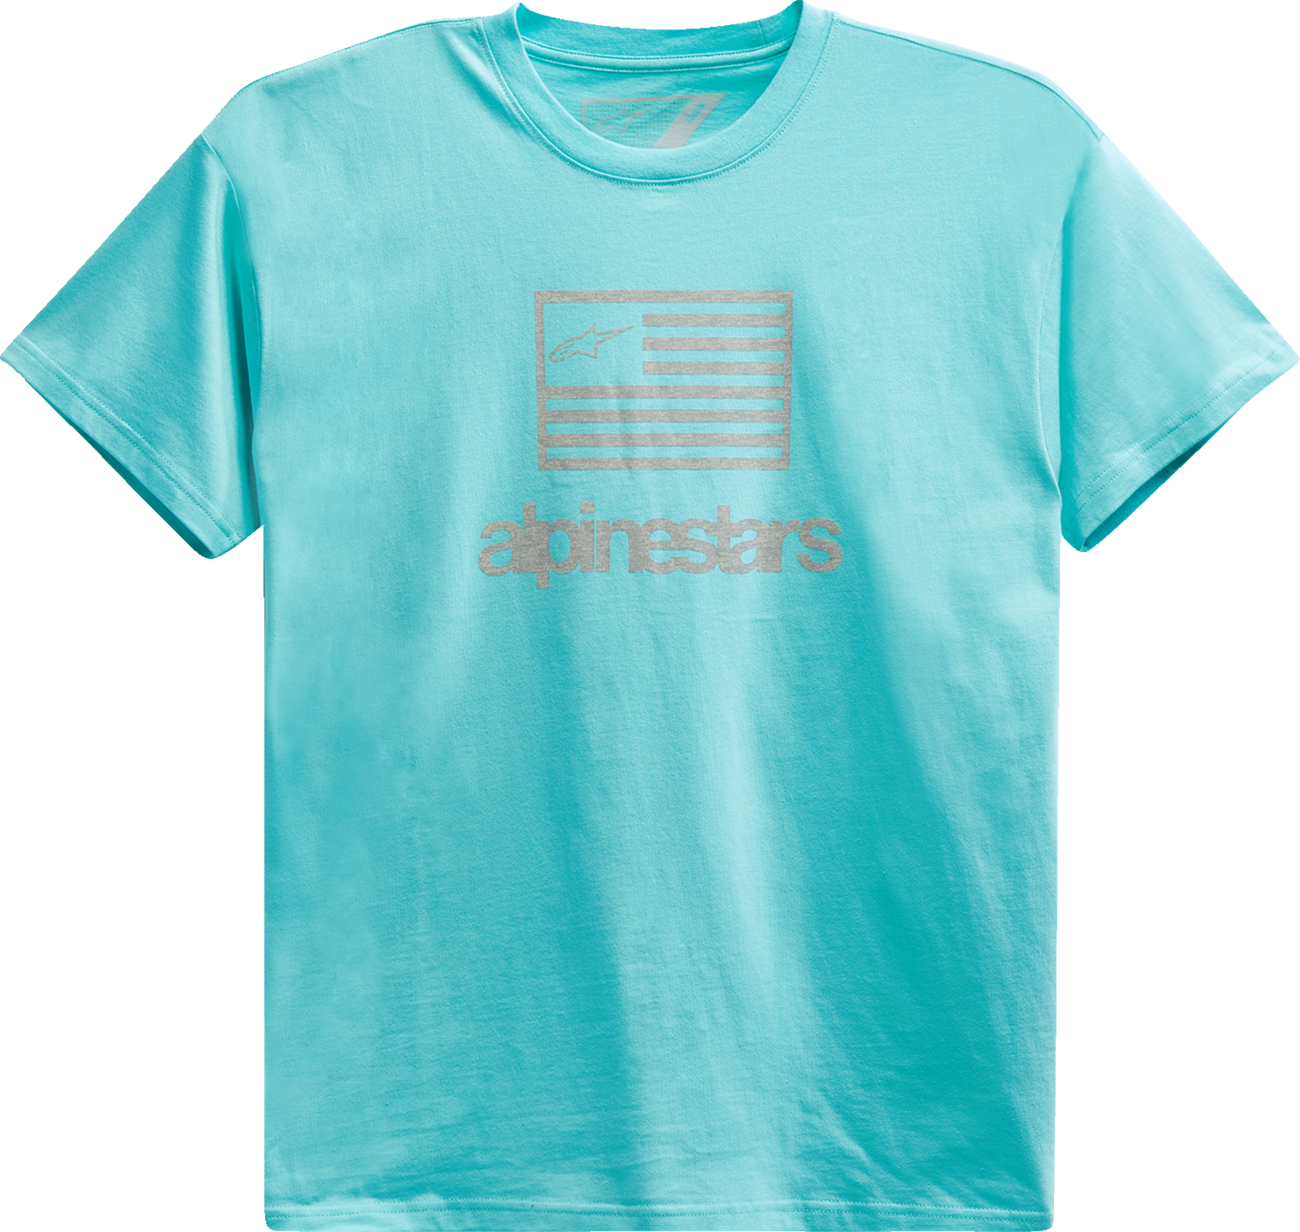 ALPINESTARS Flag T-Shirt - Light Aqua - Medium 1213726207206M